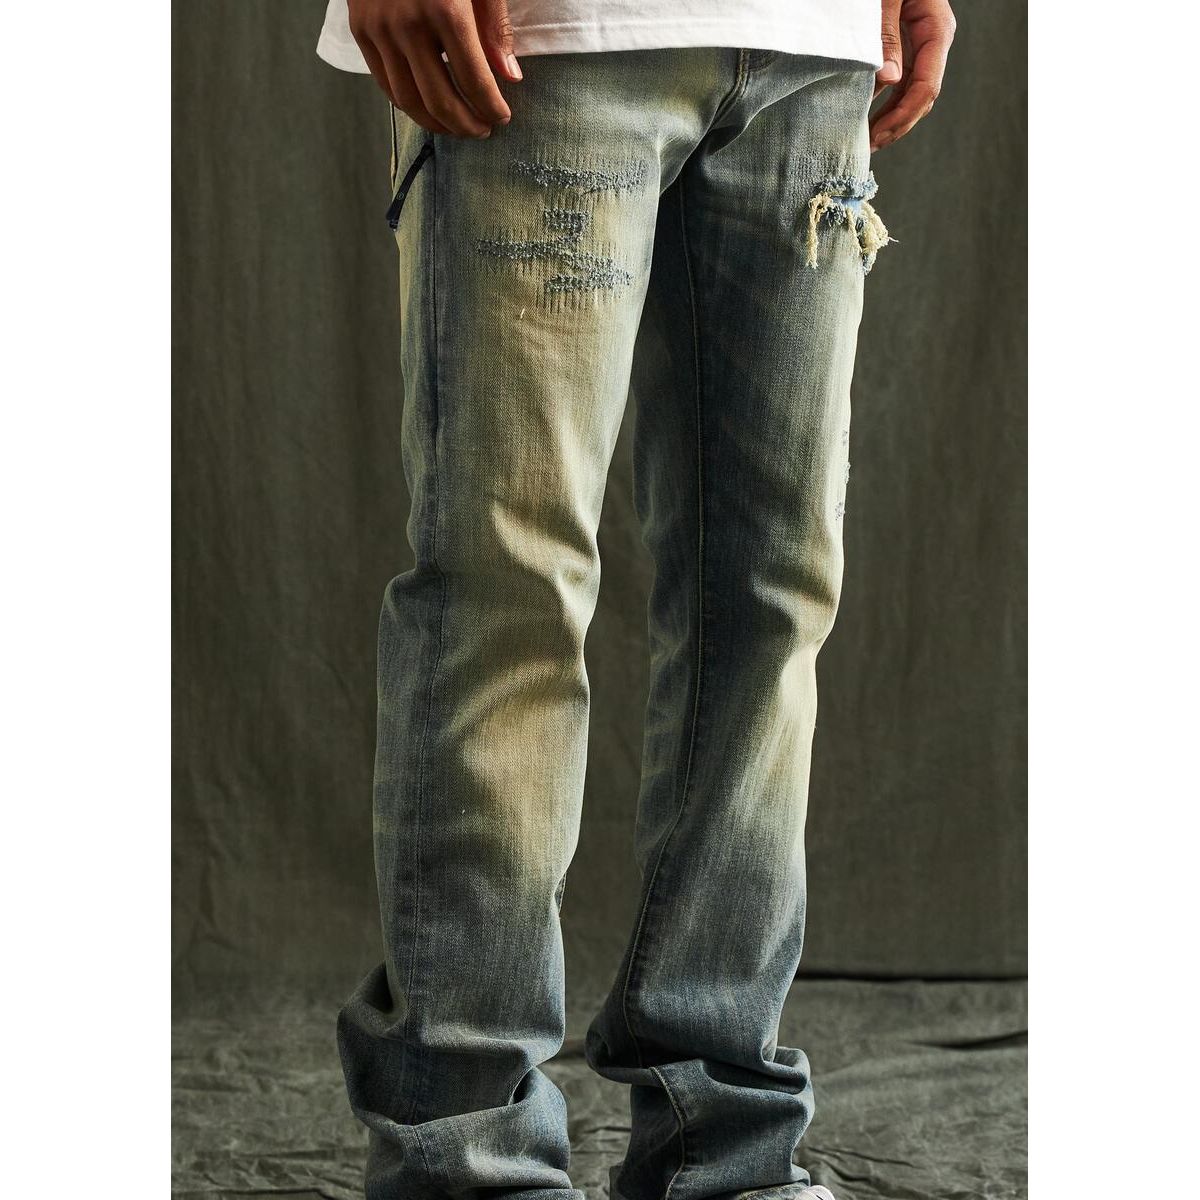 Embellish Jacky Medium Blue Sand Denim Jeans (EMBFALL123-028)